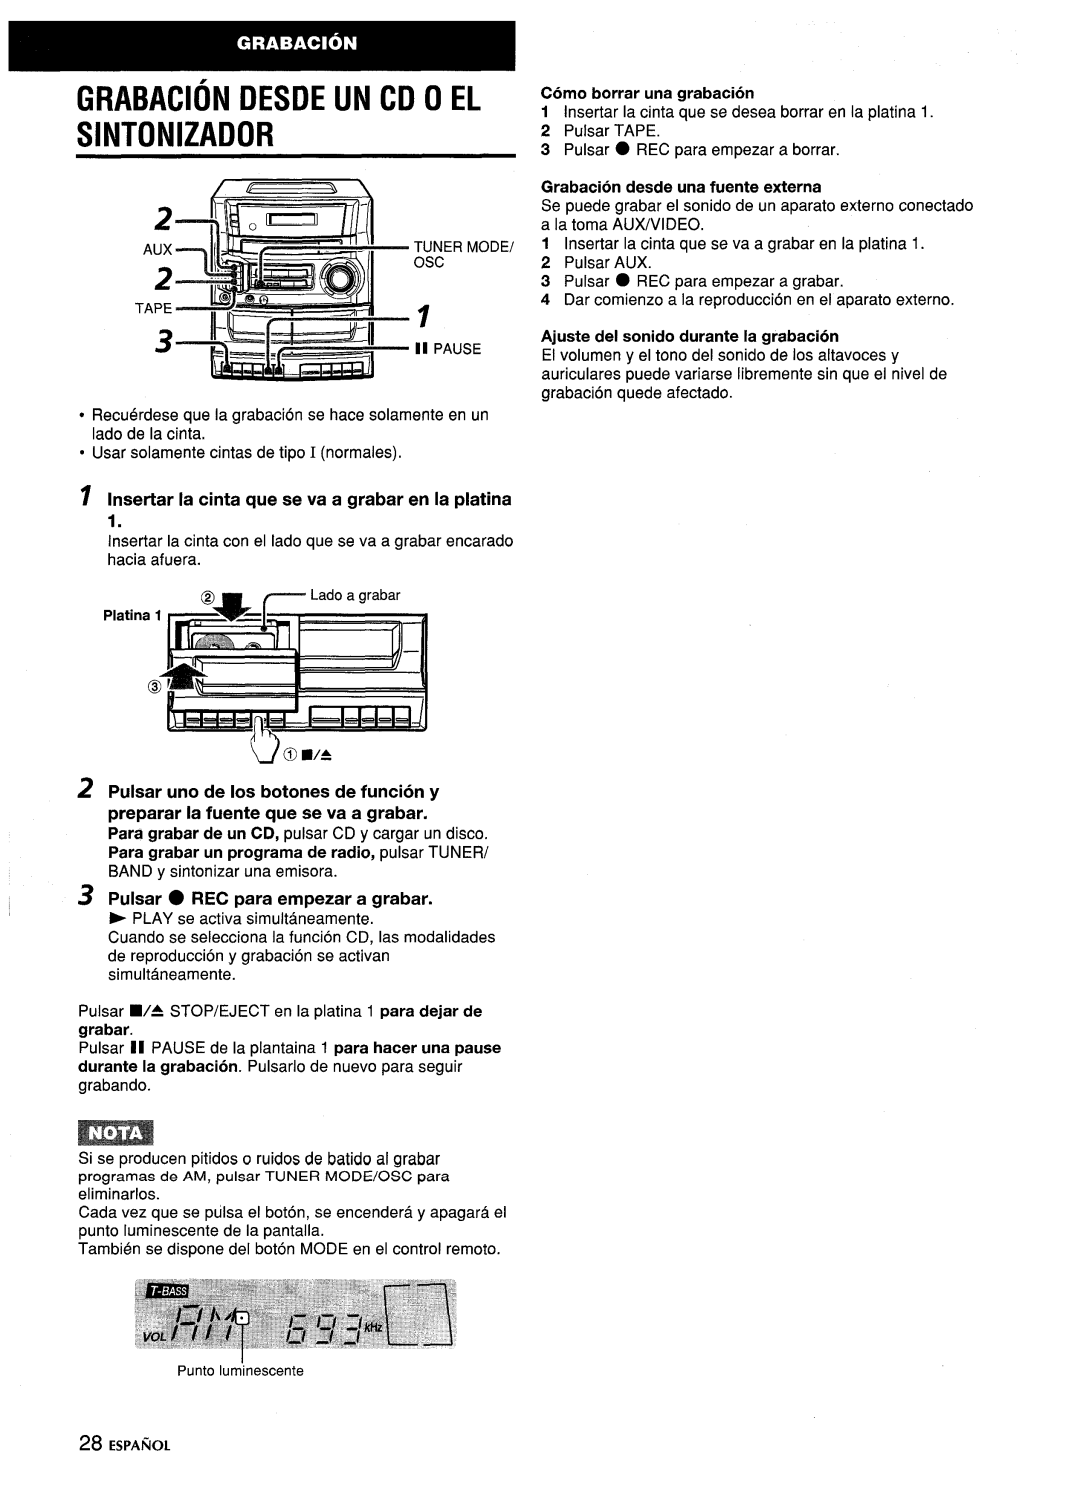 Aiwa CA-DW635 manual Grabacion Desde Un Cd O El Sintonizador, 3--+il=-”, Insertar la cinta que se va a grabar en la platina 